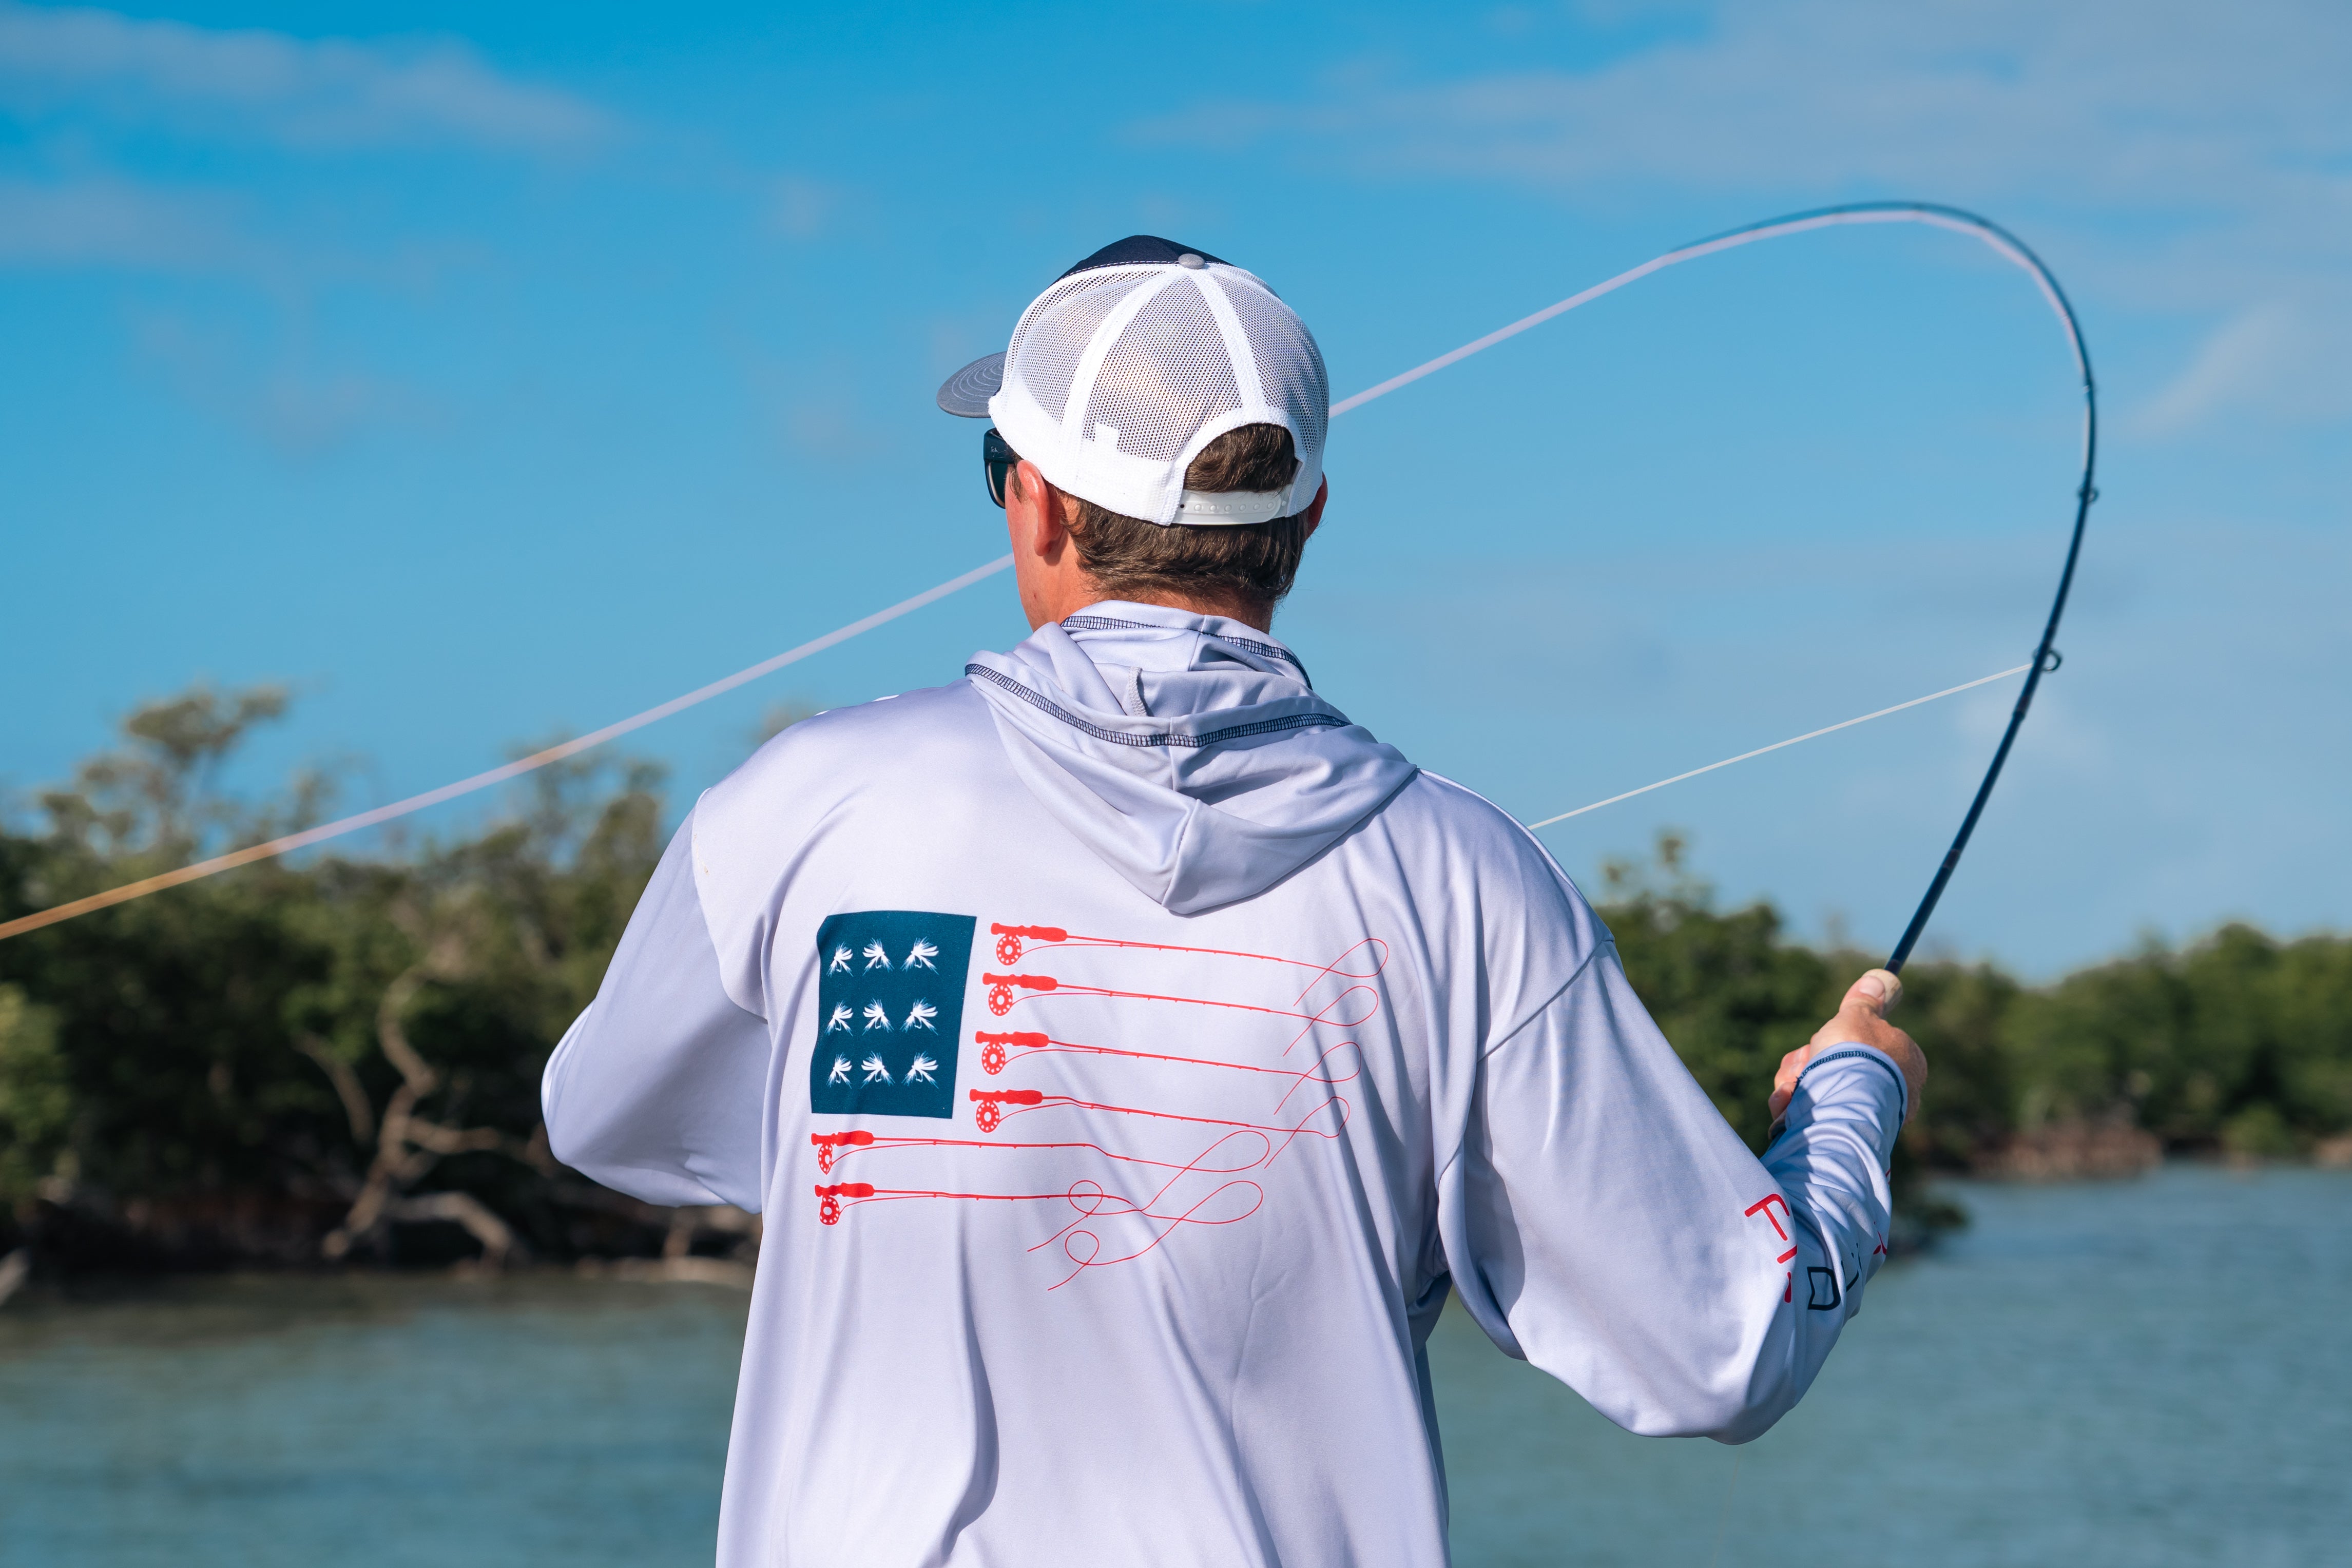 Performance fishing shirt Avail contour long sleeve - bahama blue